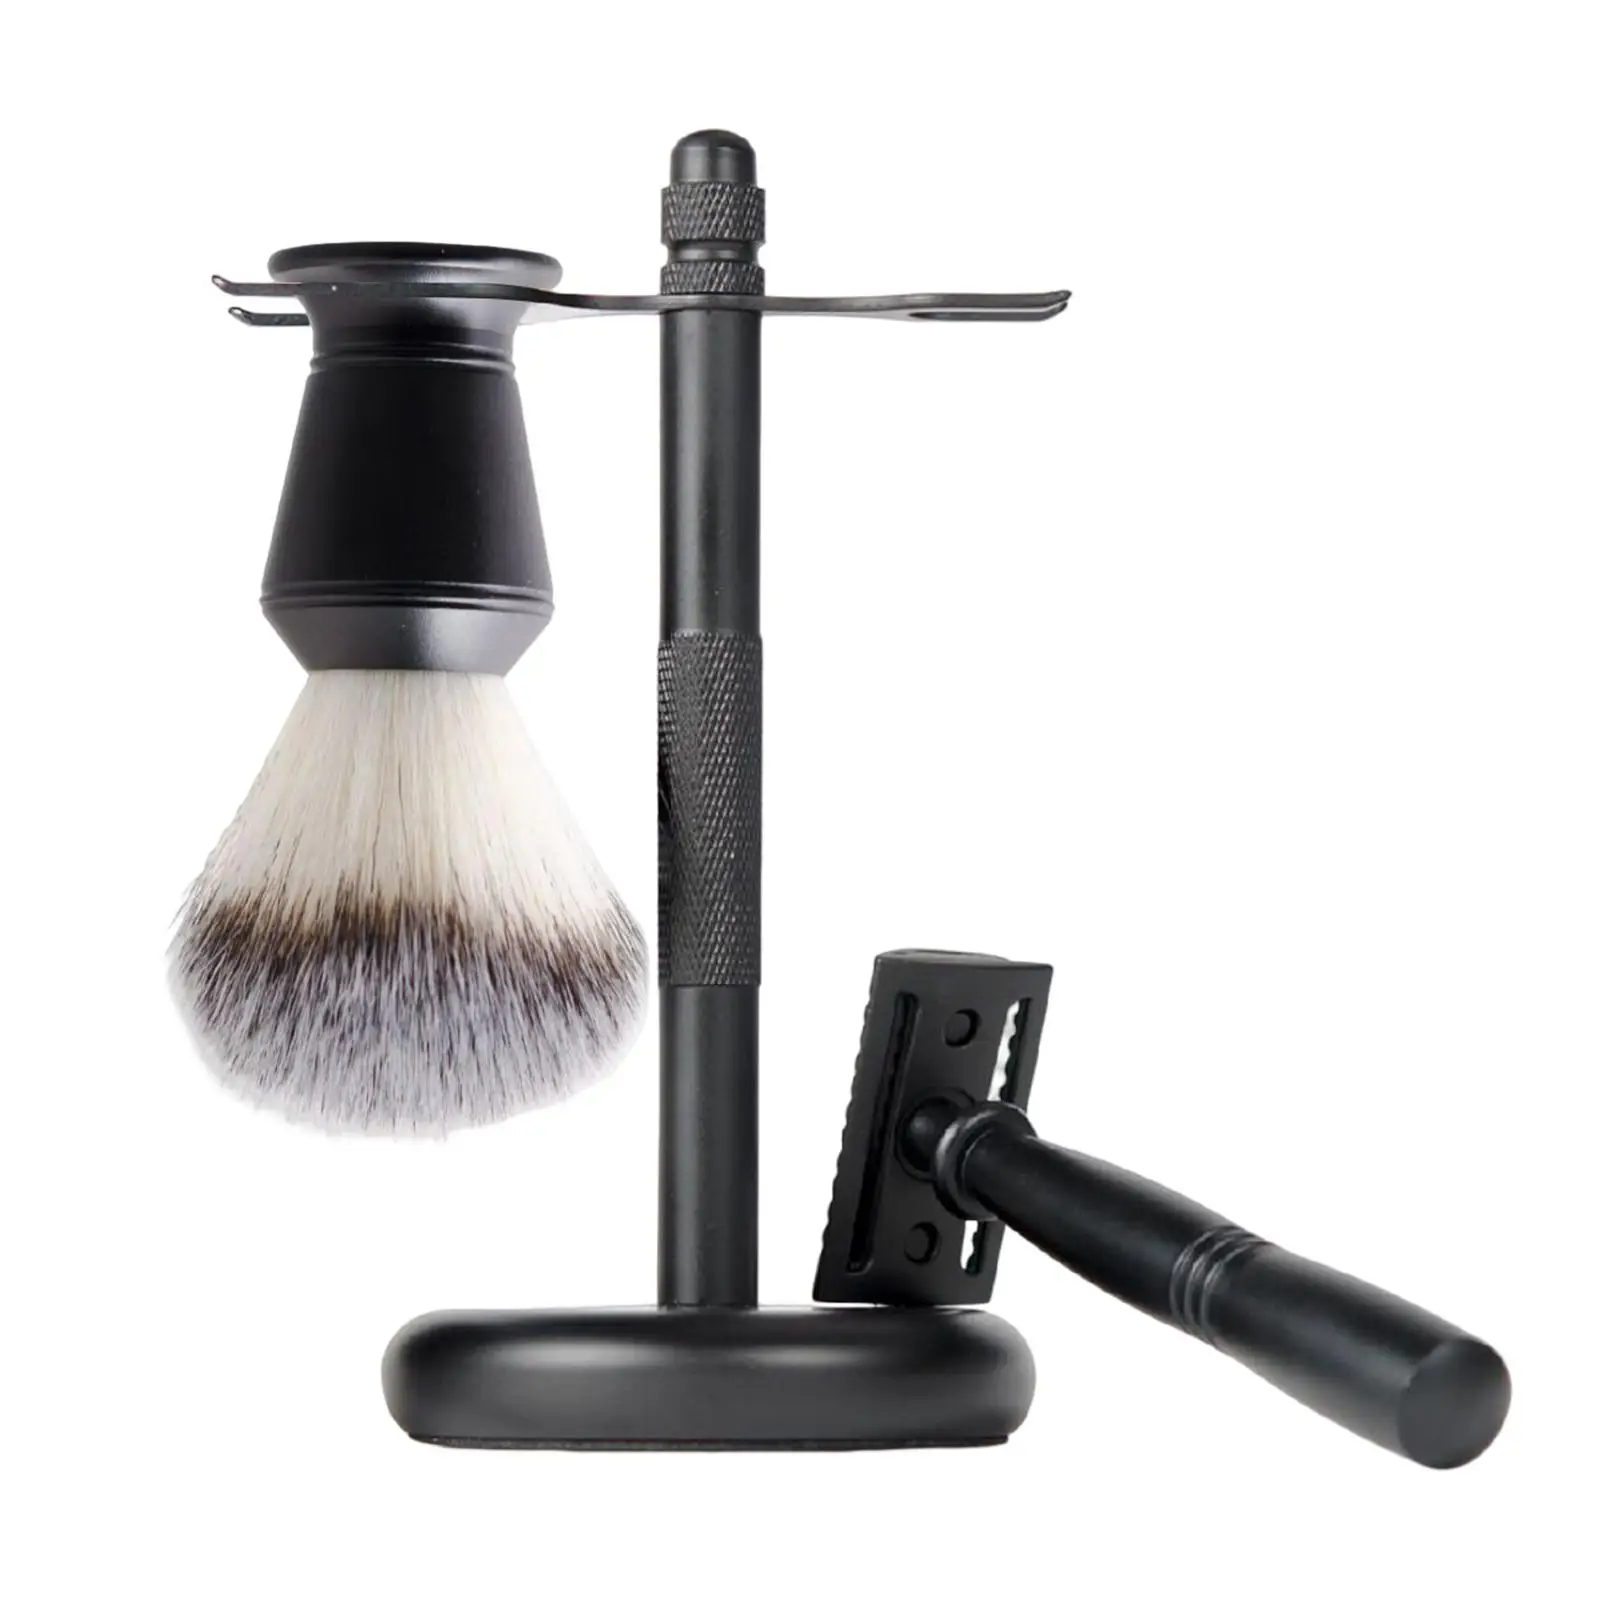 3 Pieces Shaving Set Black Elegant Shaving Brush Stand Kit Shaving Razor+ Stand Holder +shaving Brush Set Luxury Shave Accessory